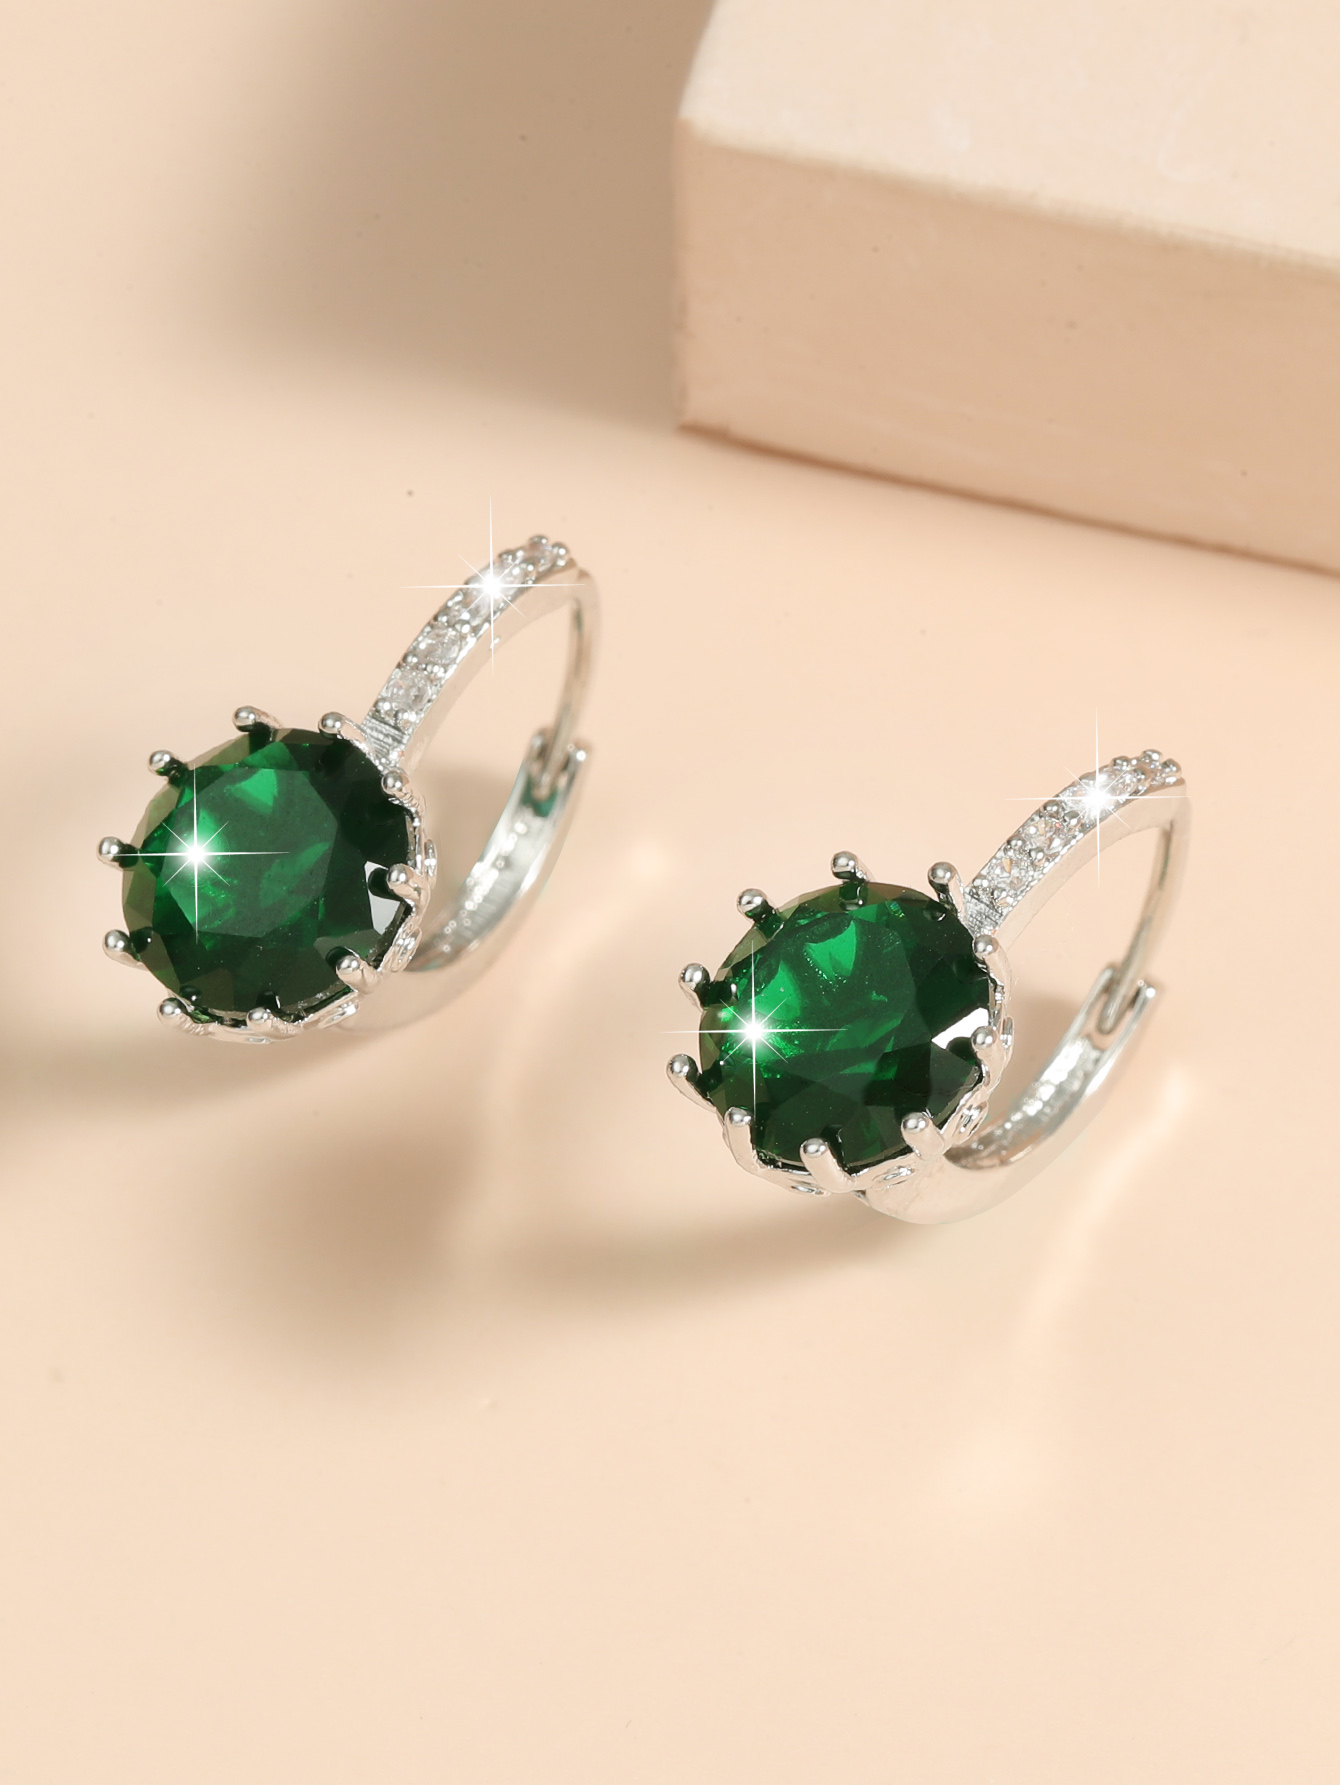 15 x Stunning Huggies Earrings with Green Cubic Zirconia|UK SELLER|GCJ005-Green